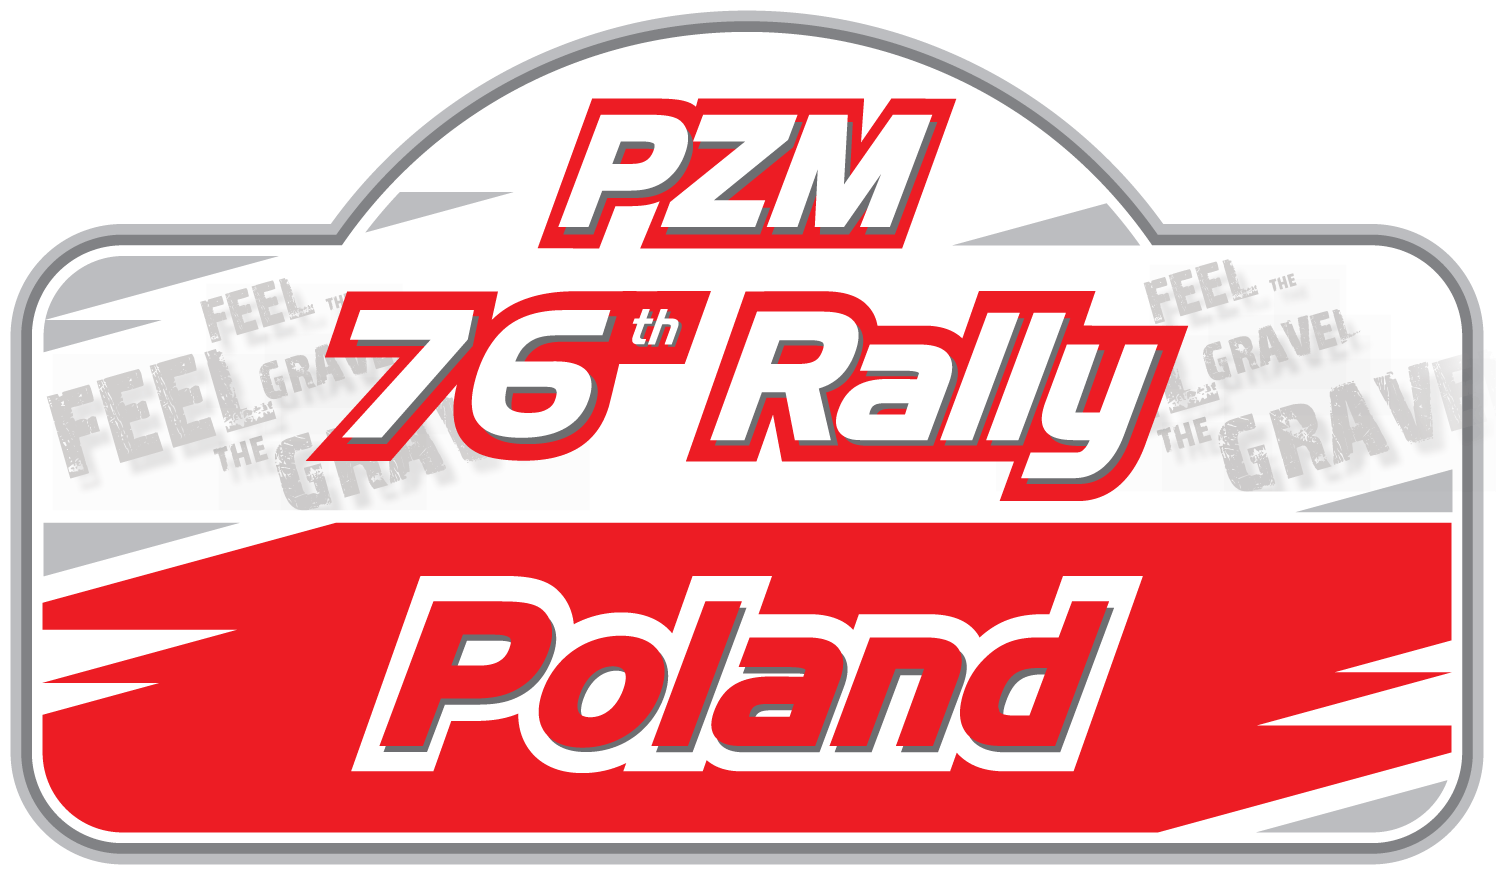 Poland Logo - PZM 76th Rally Poland ERC. European Rally Championship